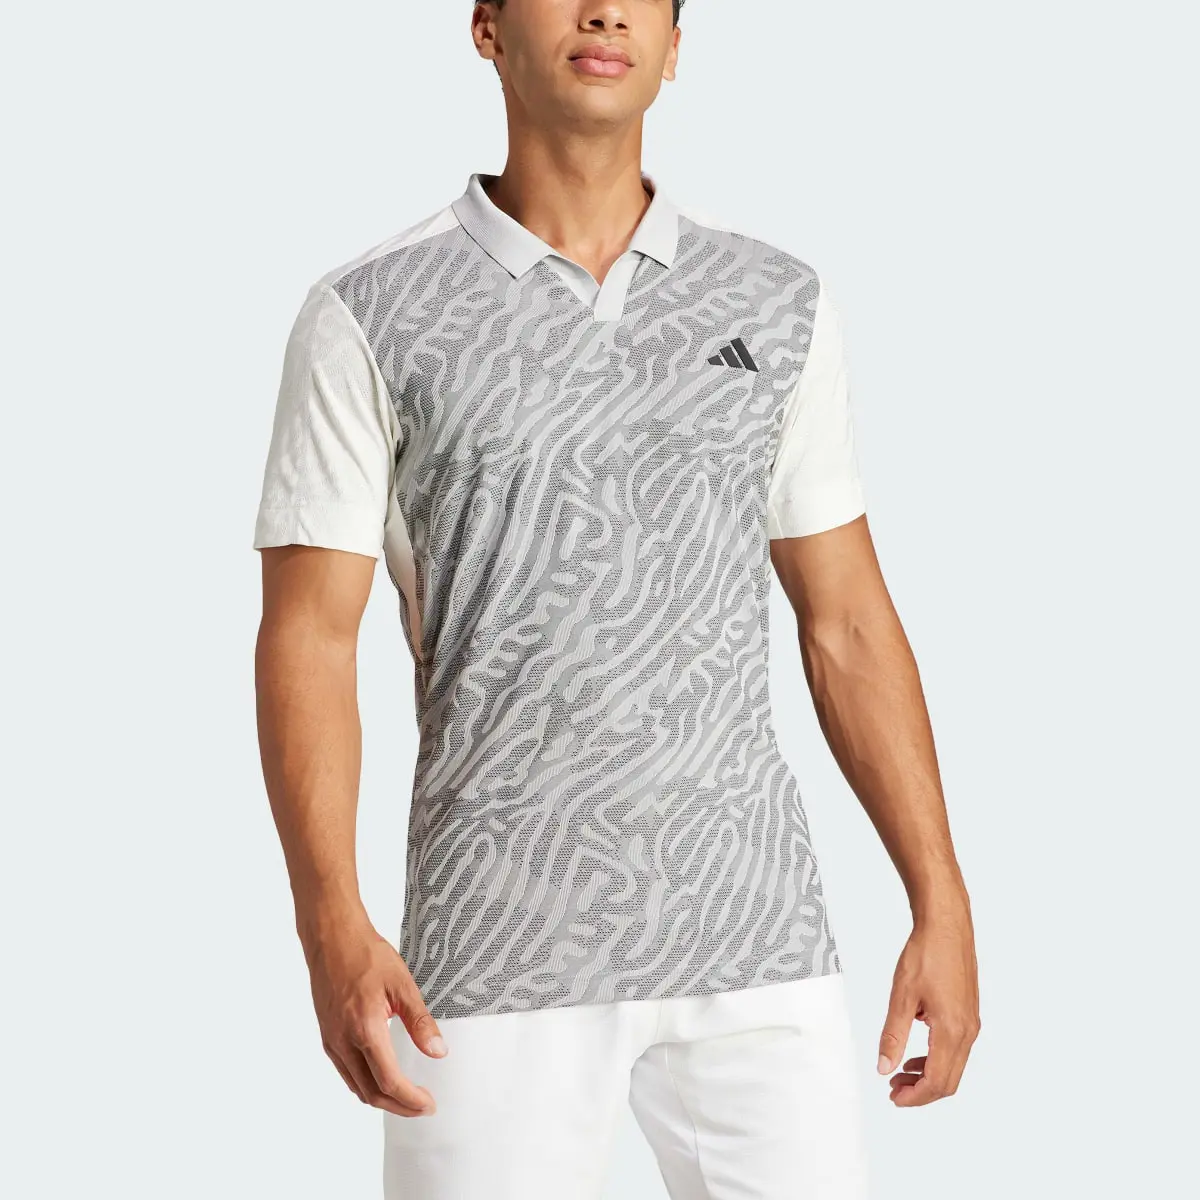 Adidas Tennis Airchill Pro FreeLift Polo Shirt. 1